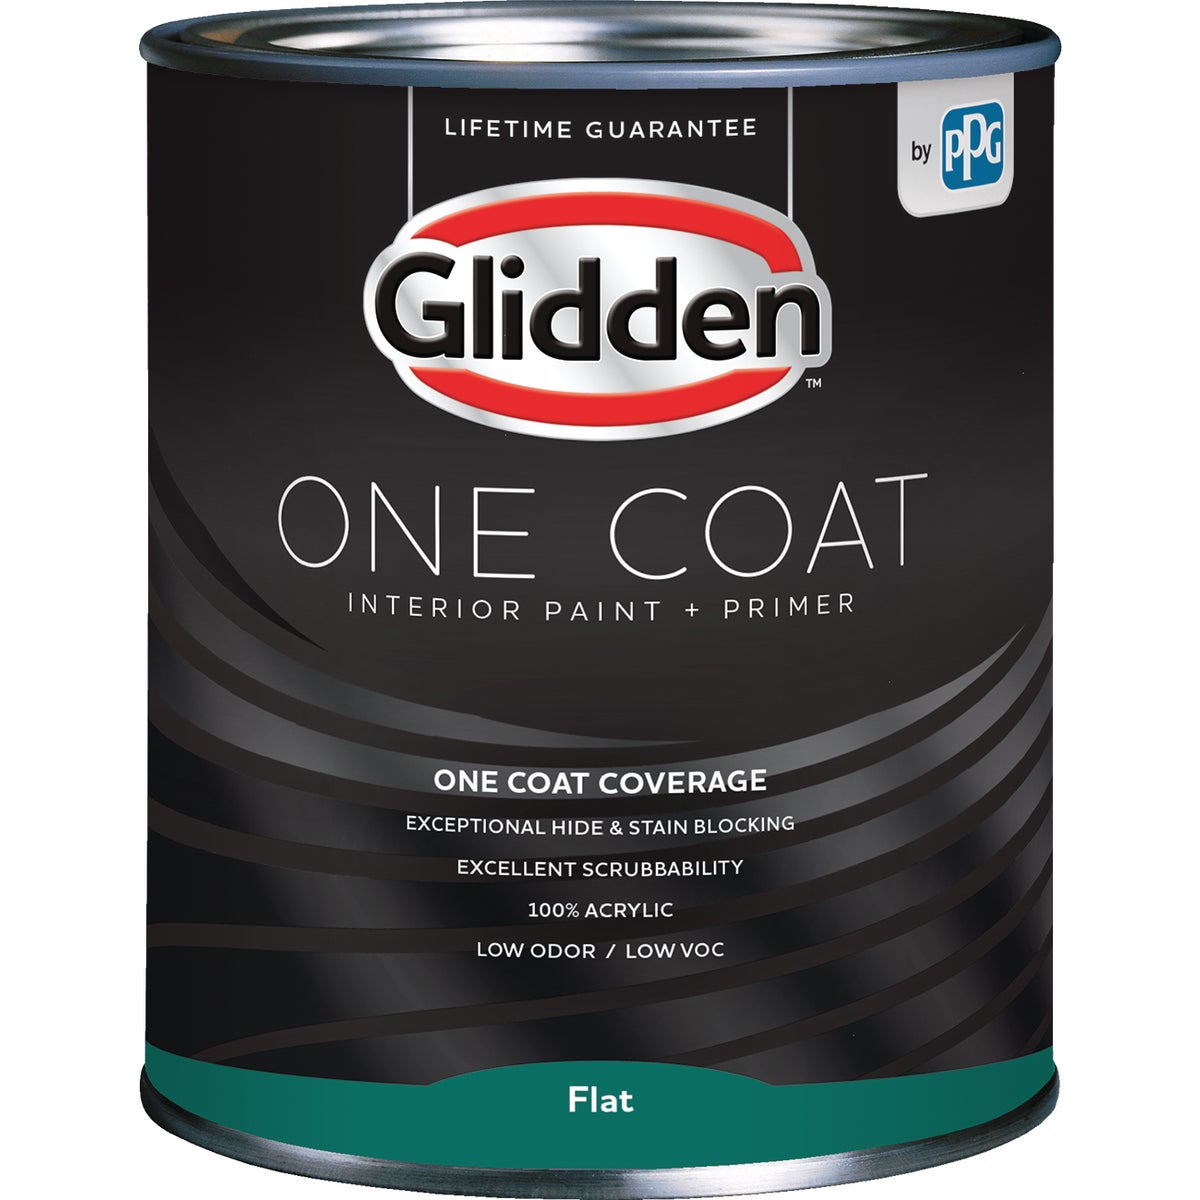 Glidden One Coat Interior Paint + Primer Flat White & Pastel Base Quart